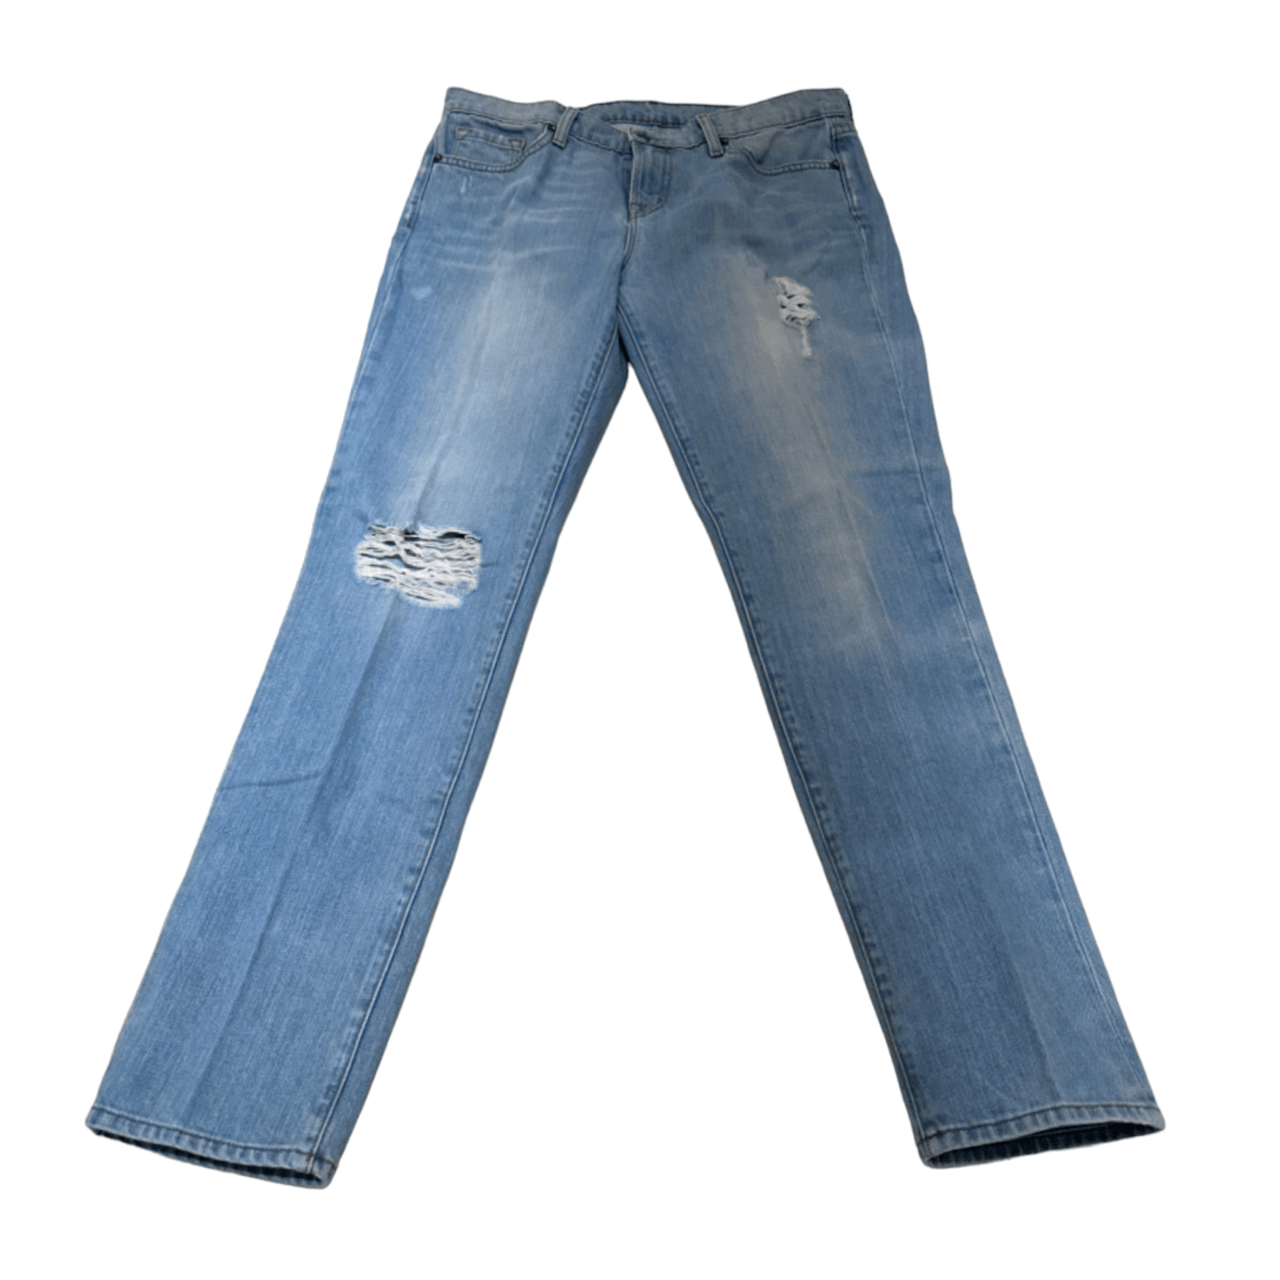 J Brand Light Blue Ripped Jeans Long Pants